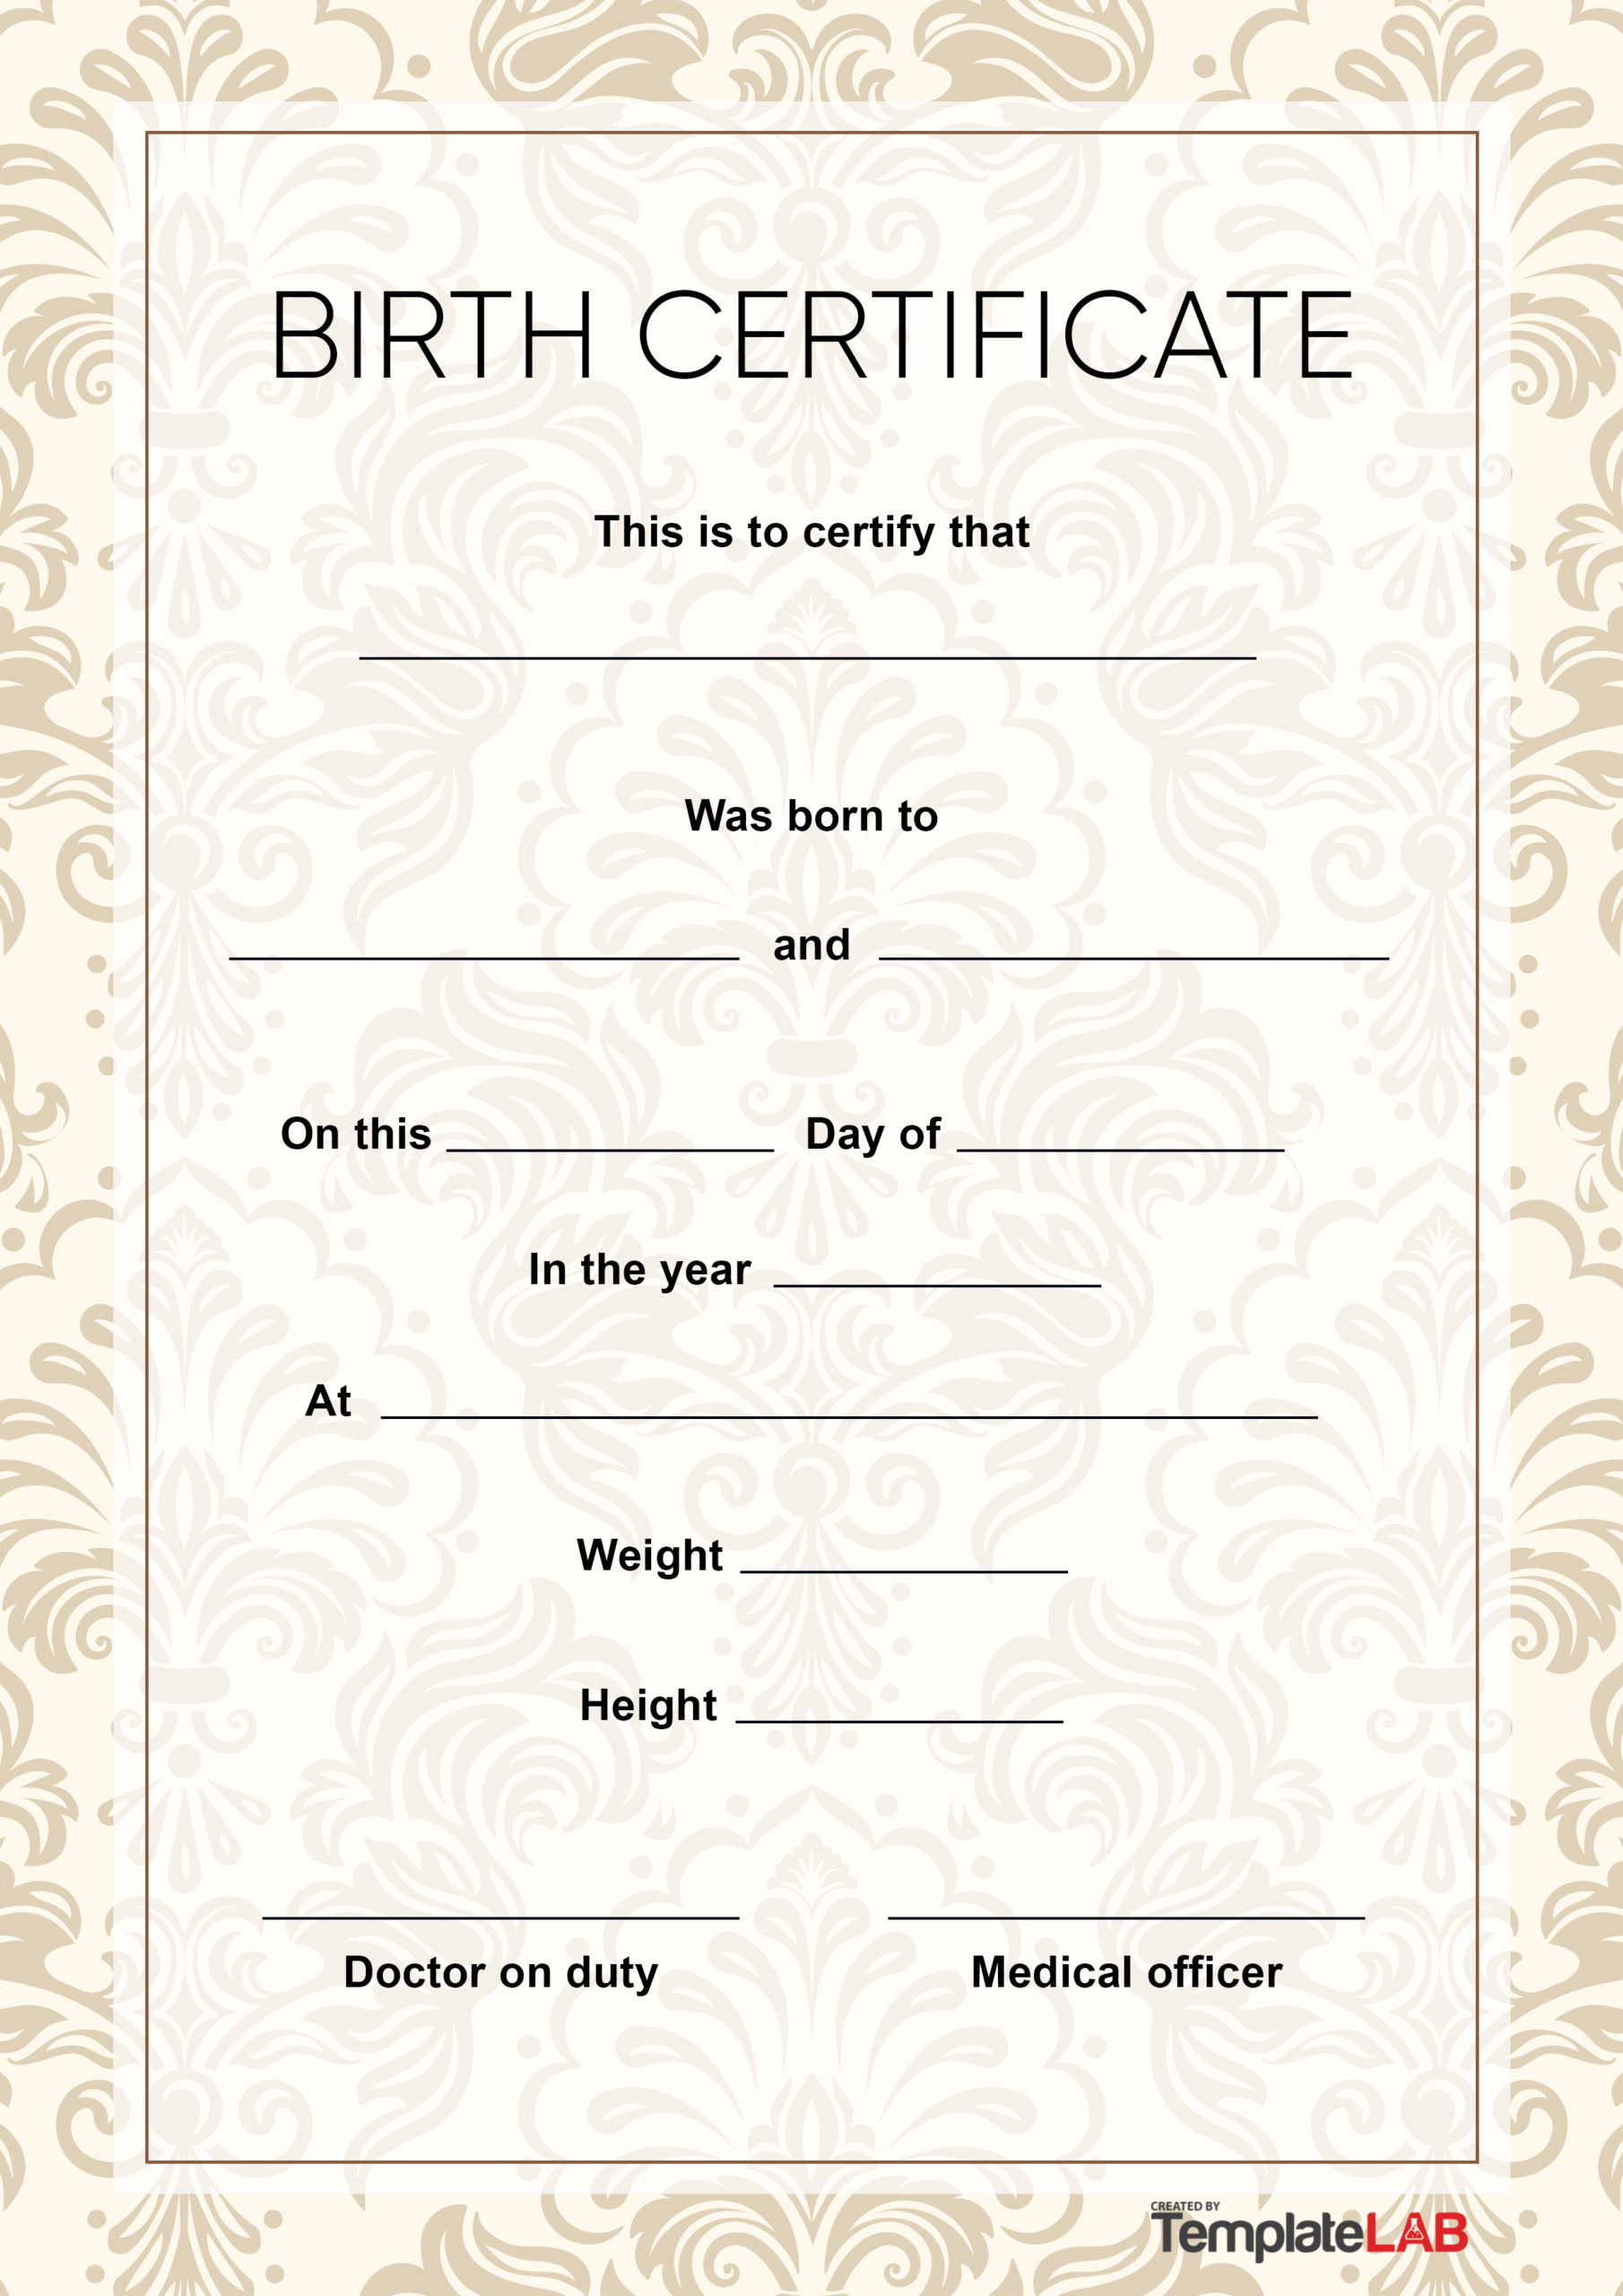 15 Birth Certificate Templates Word Pdf ᐅ Templatelab